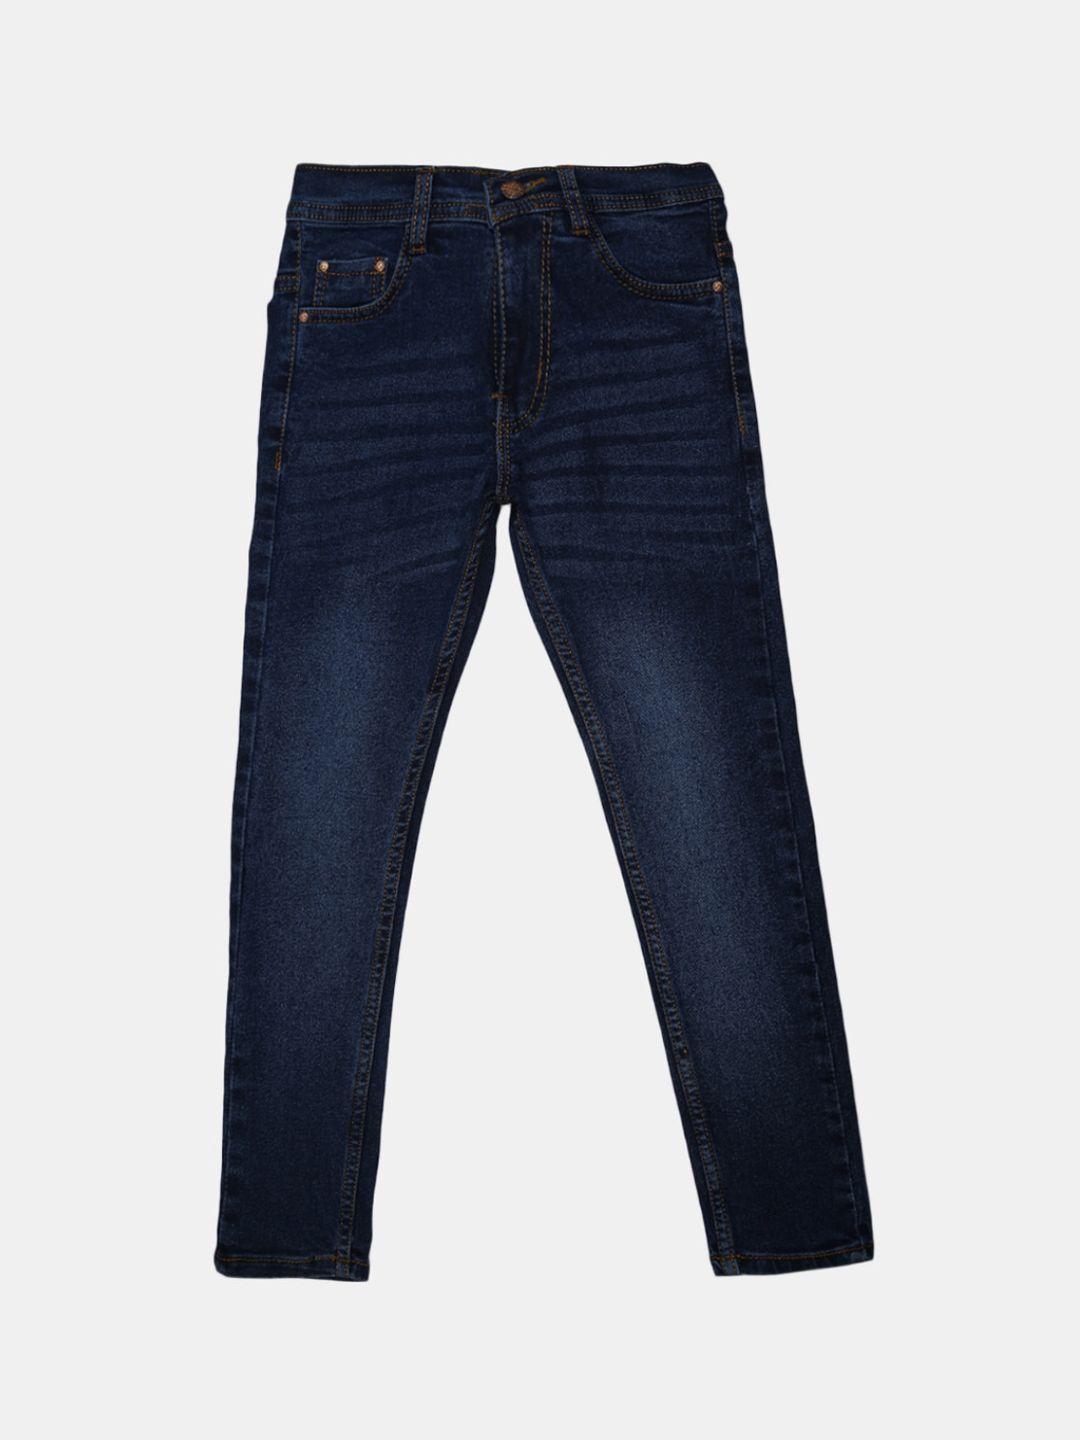 v-mart boys blue light fade jeans